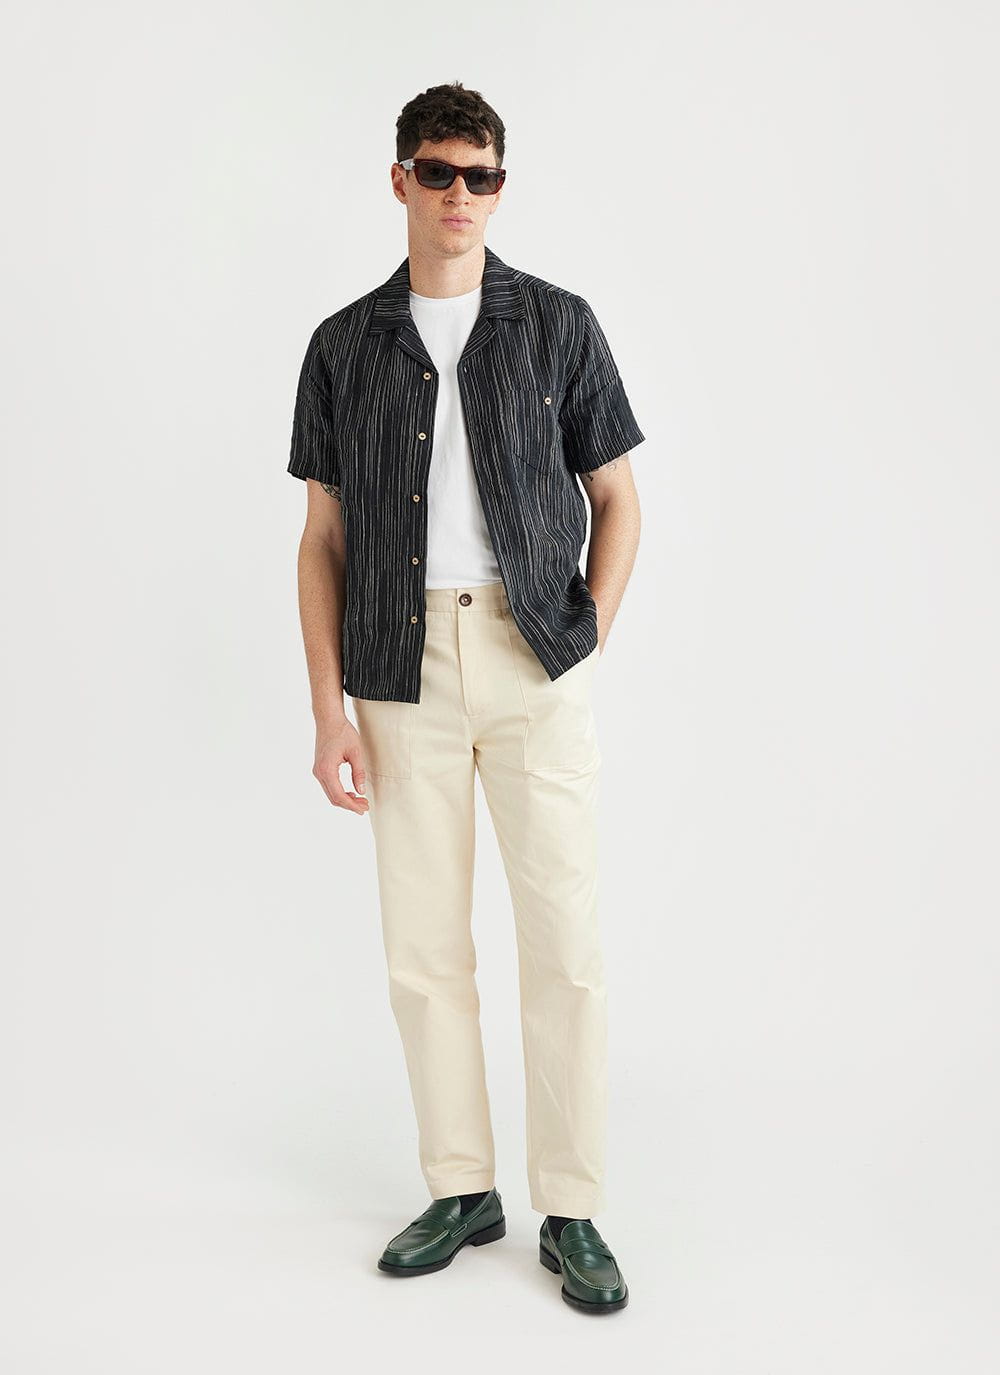 Men's Cuban Linen Shirt | Short Sleeve Shirt | Black Stripe | Percival